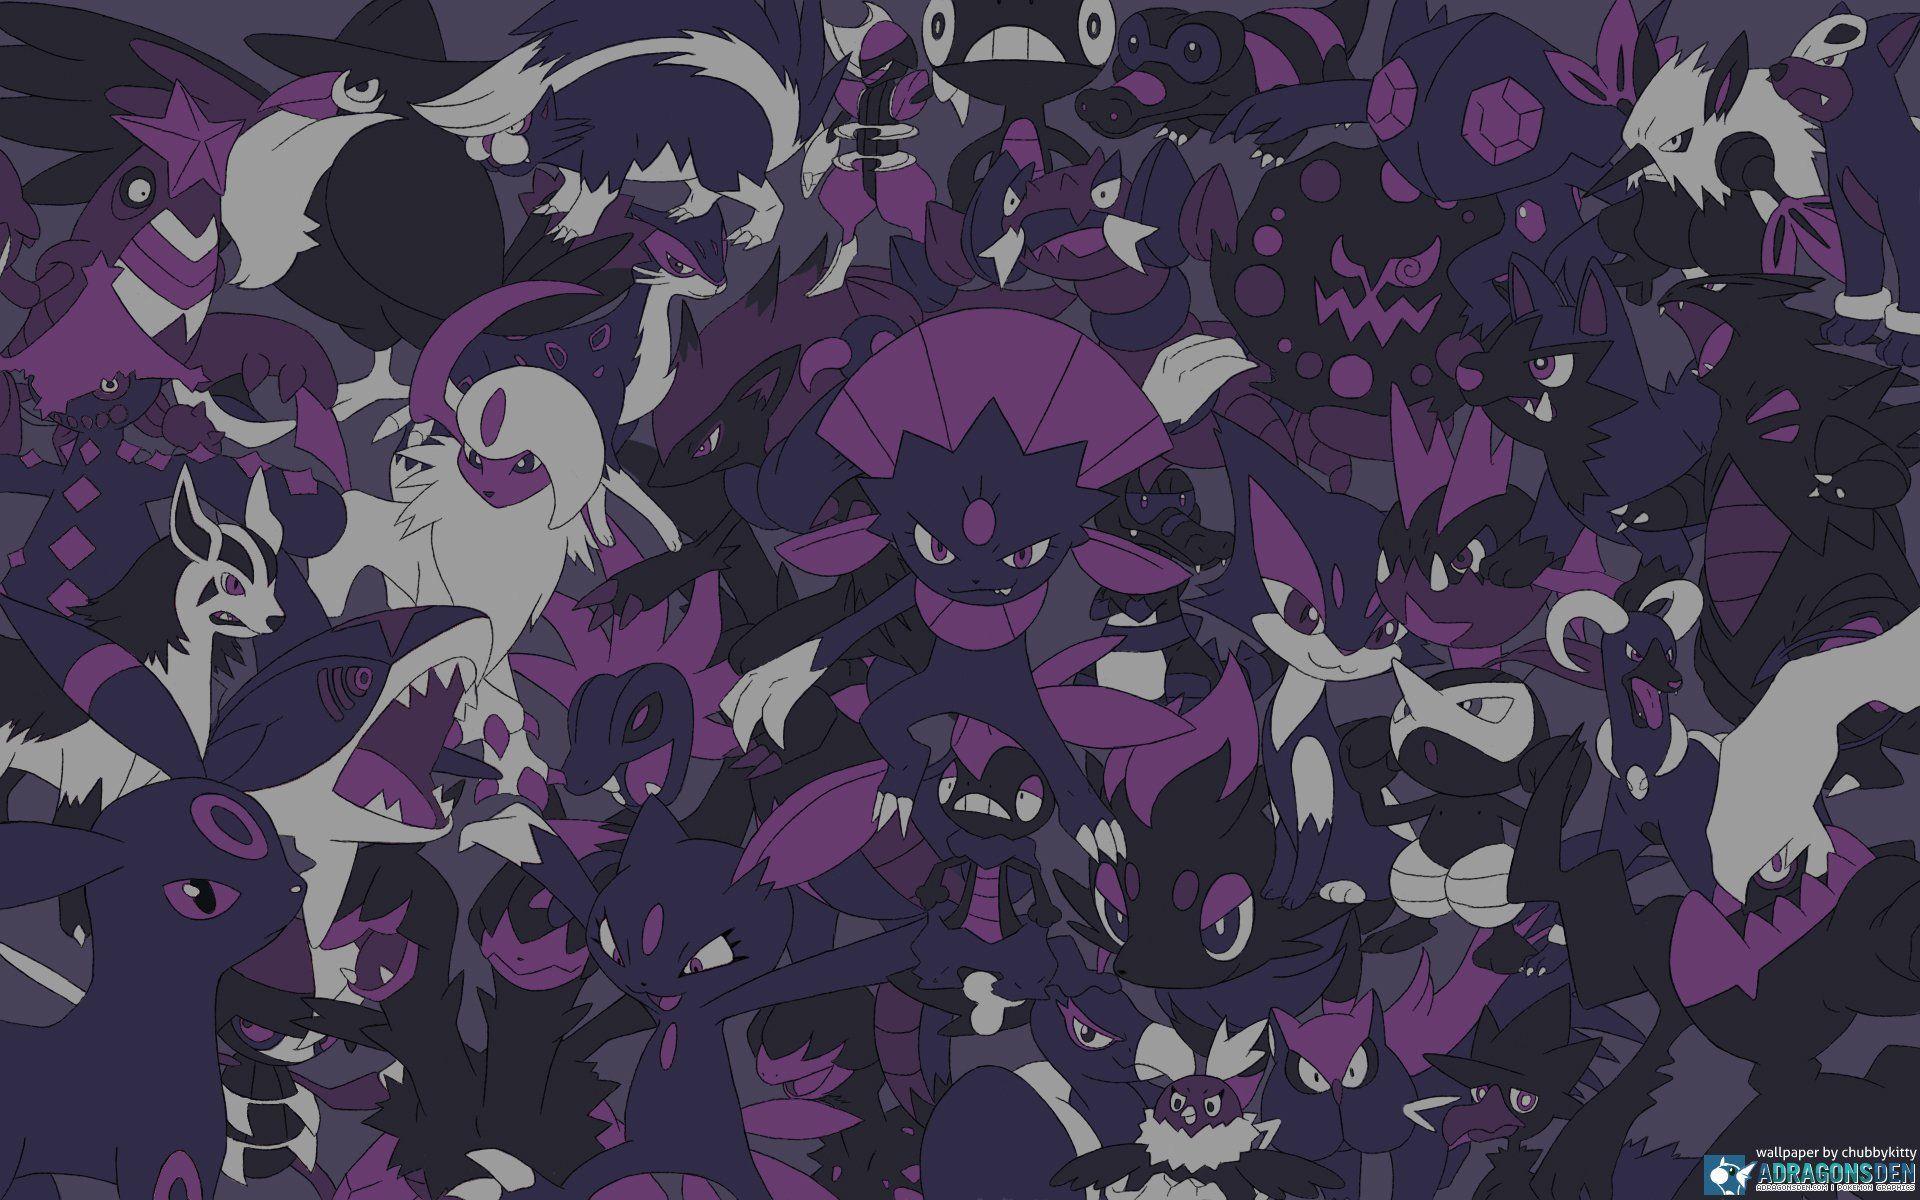 Murkrow (Pokémon) HD Wallpaper and Background